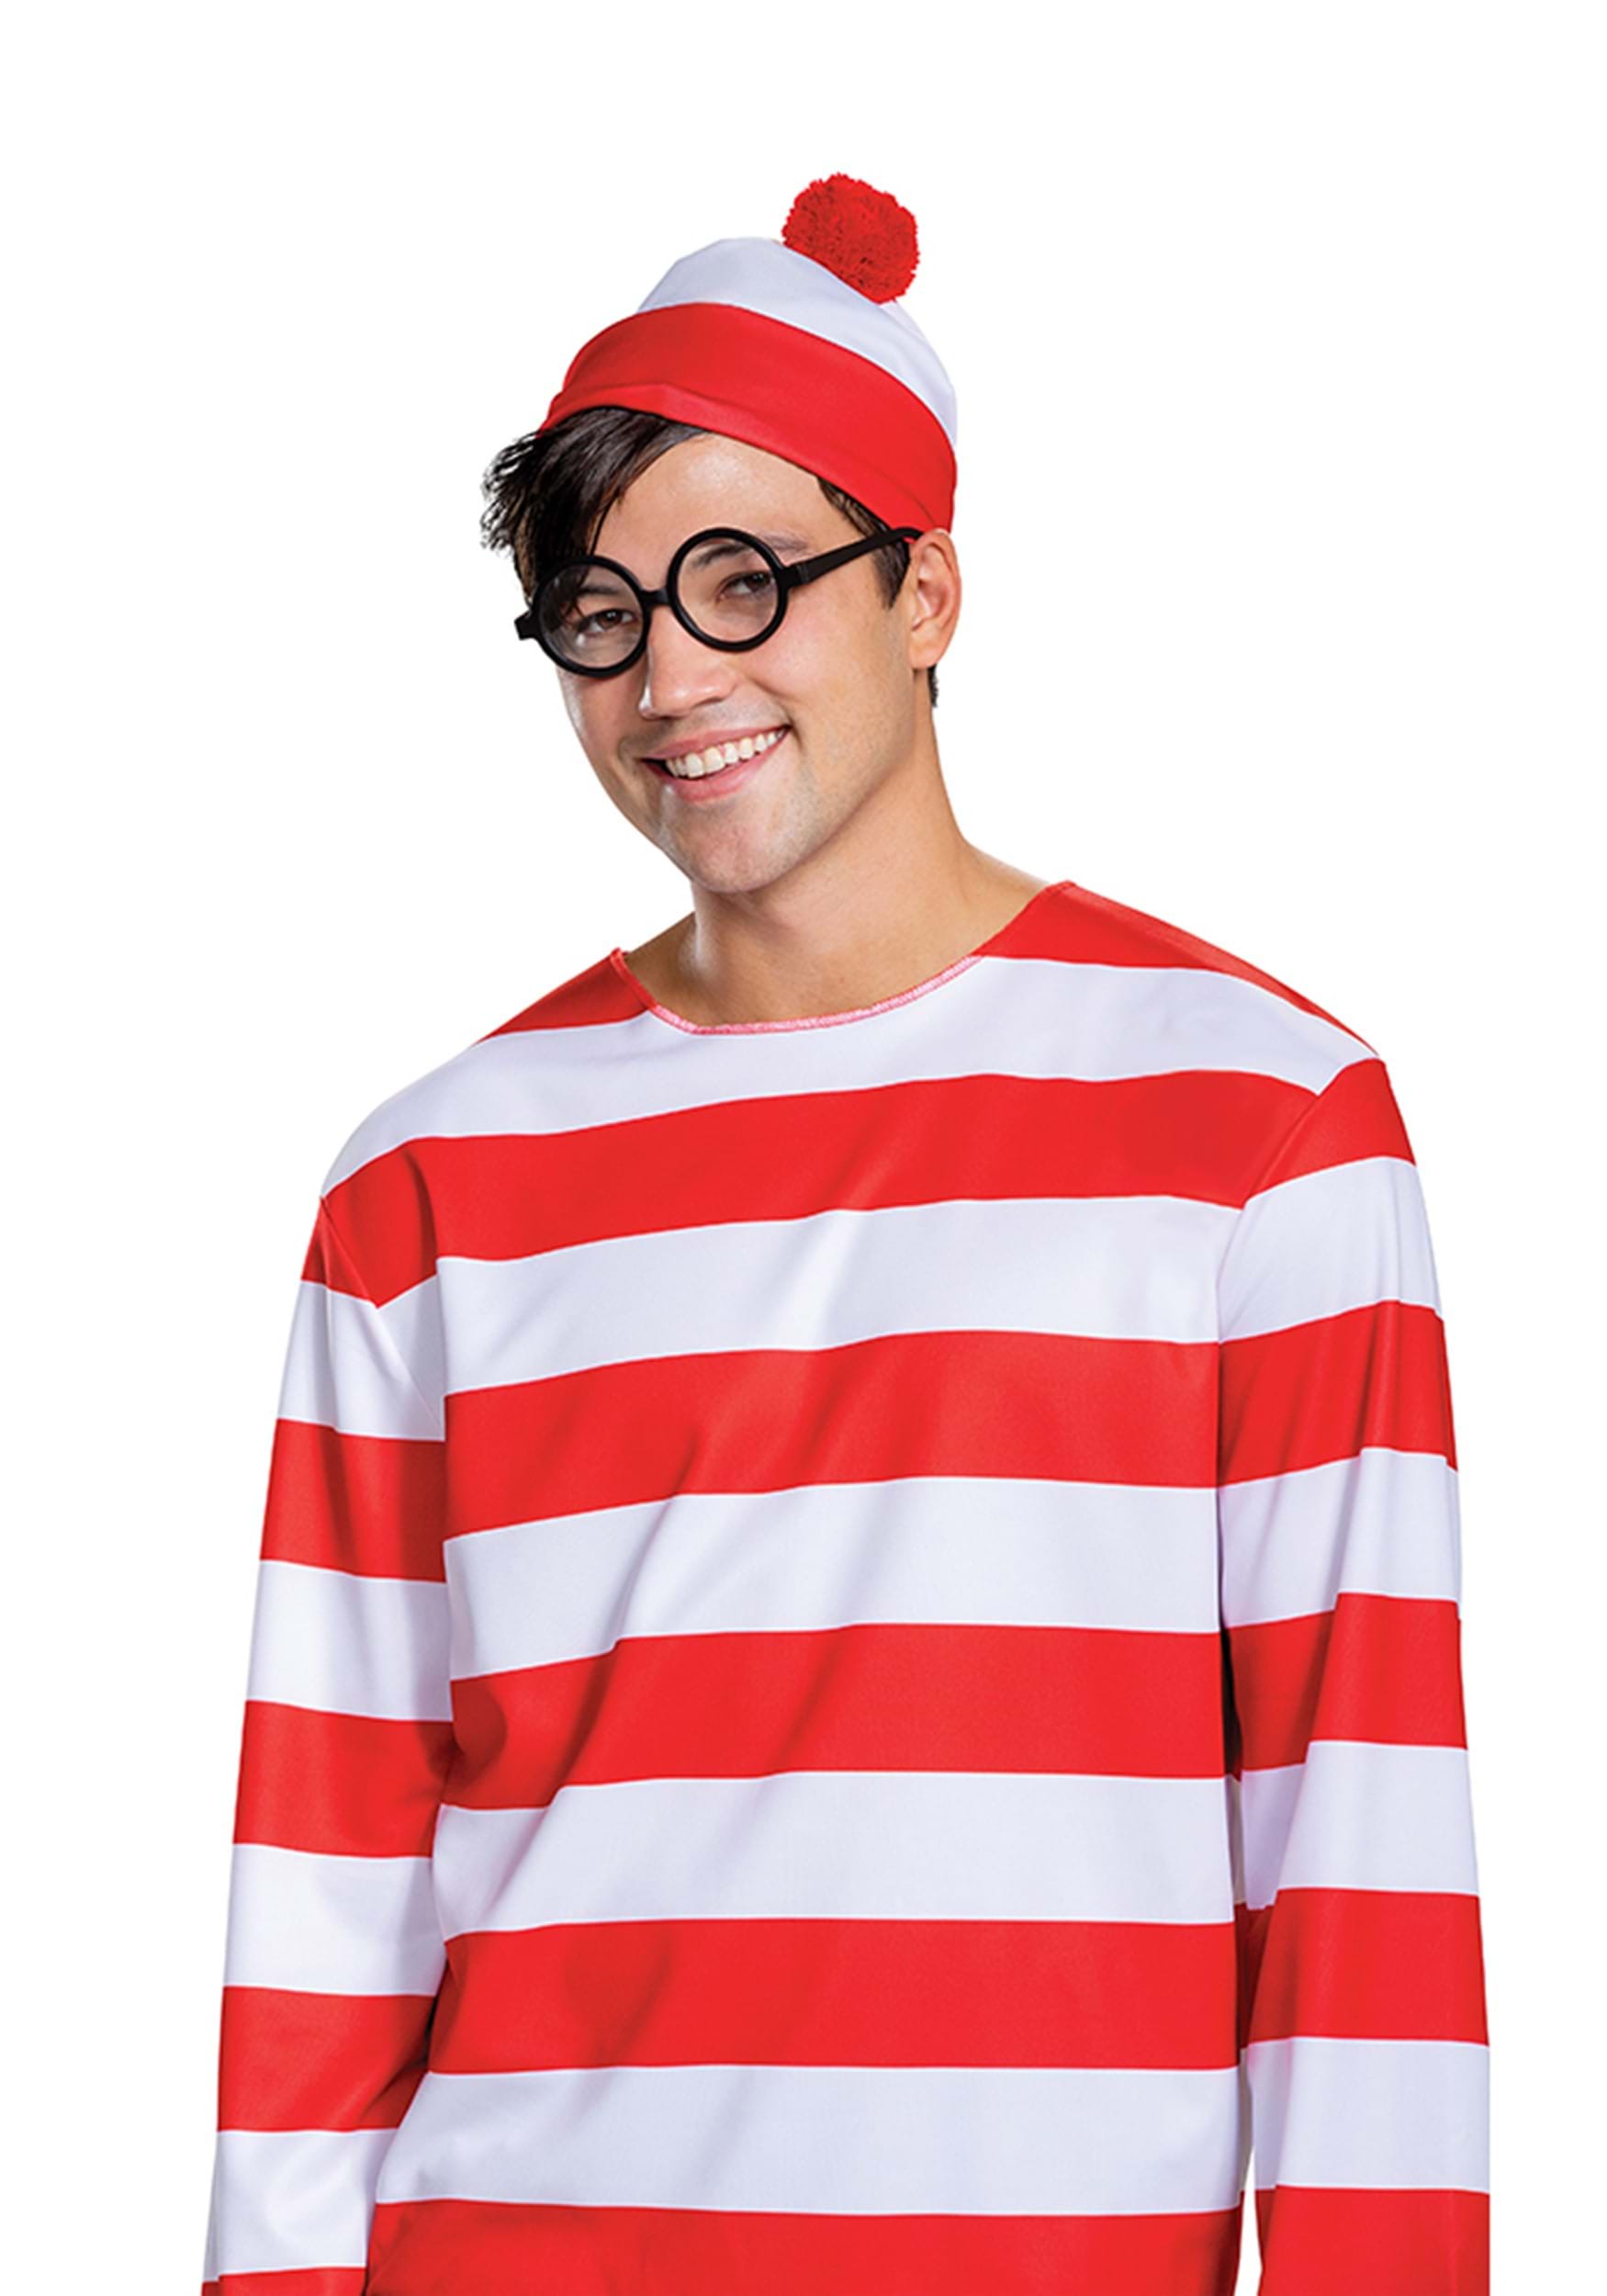 Where’s Waldo Accessory Kit